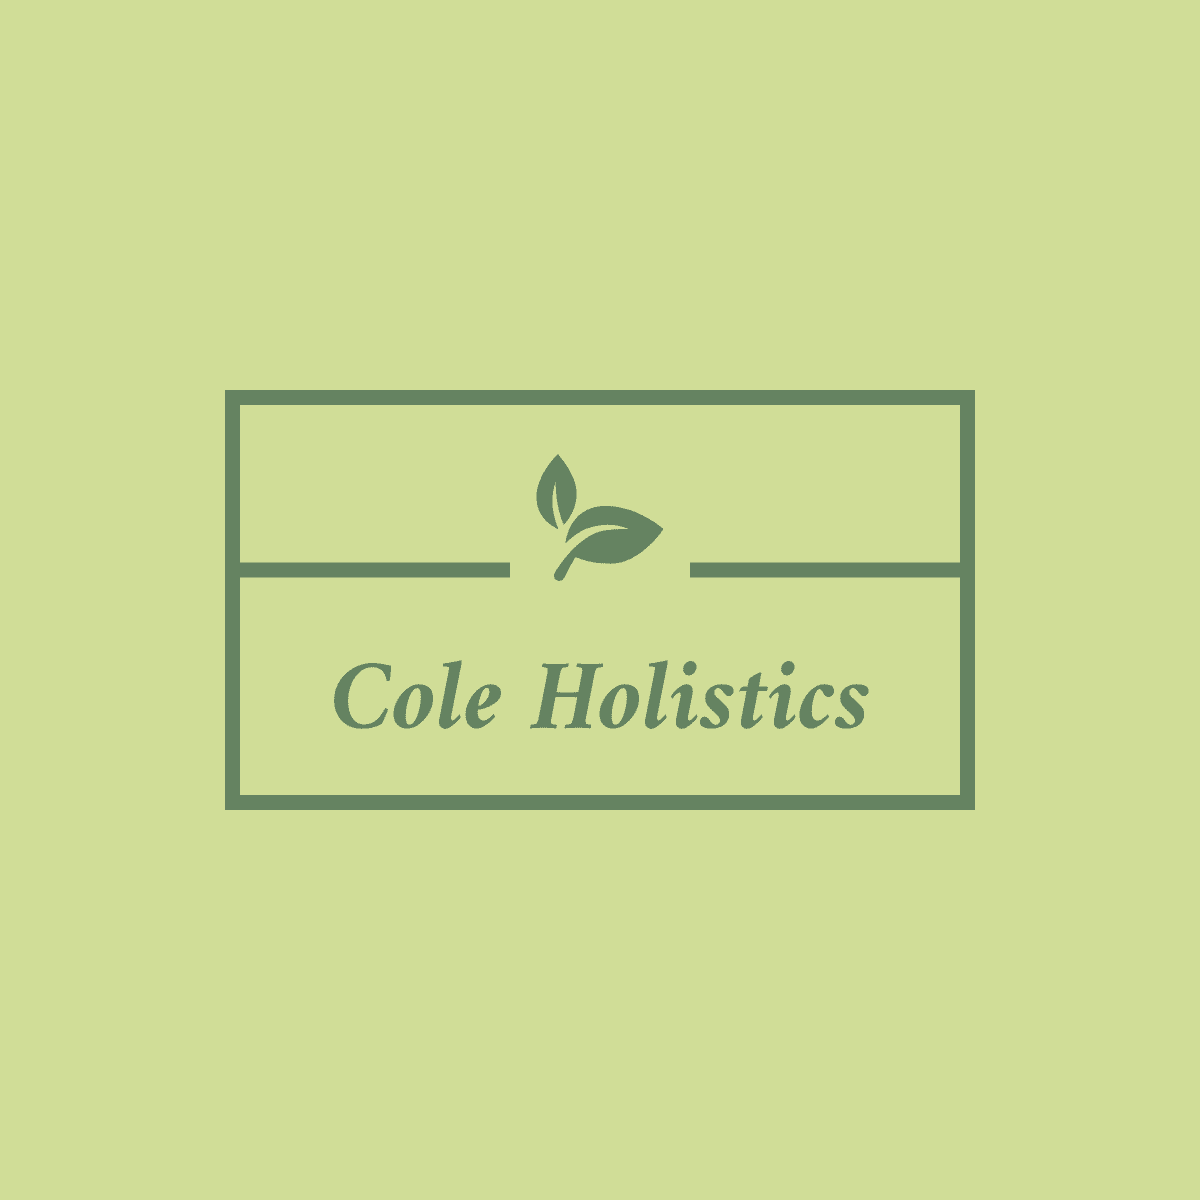 Cole Holistics